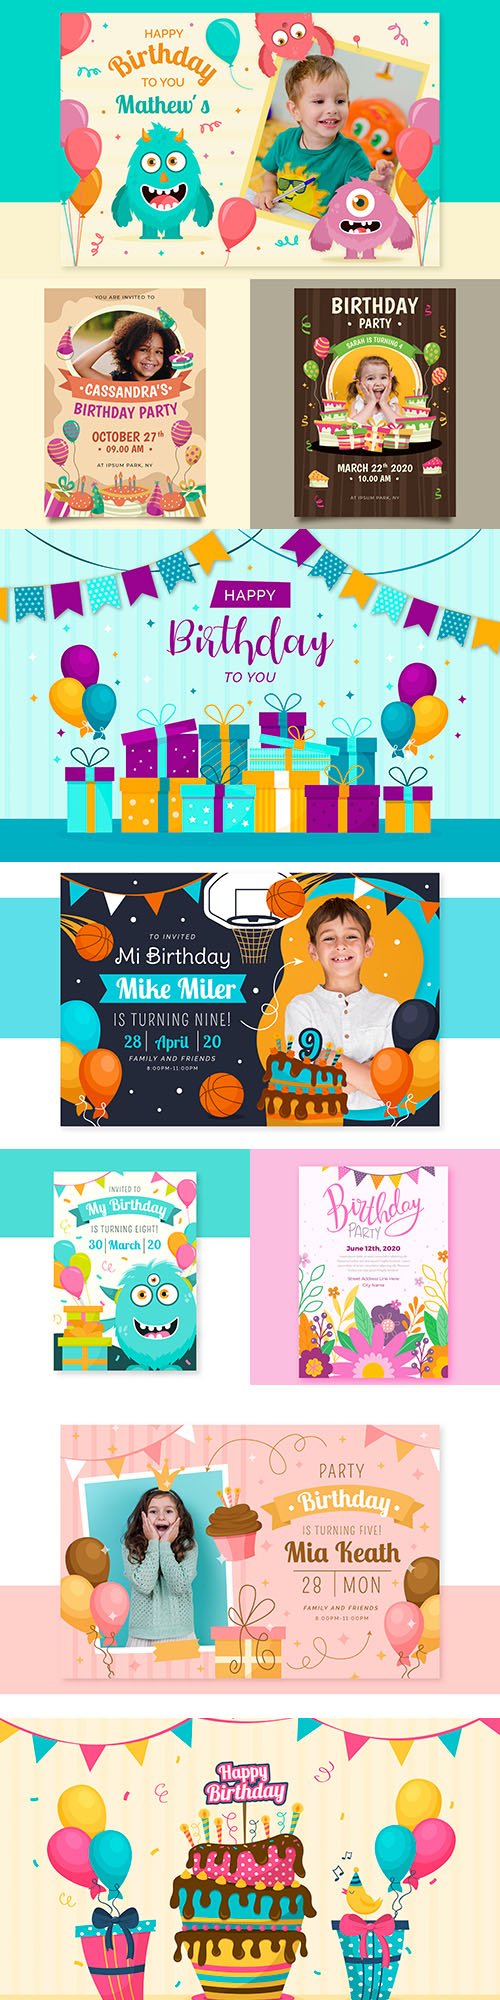 Children 's birthday invitation template with photos